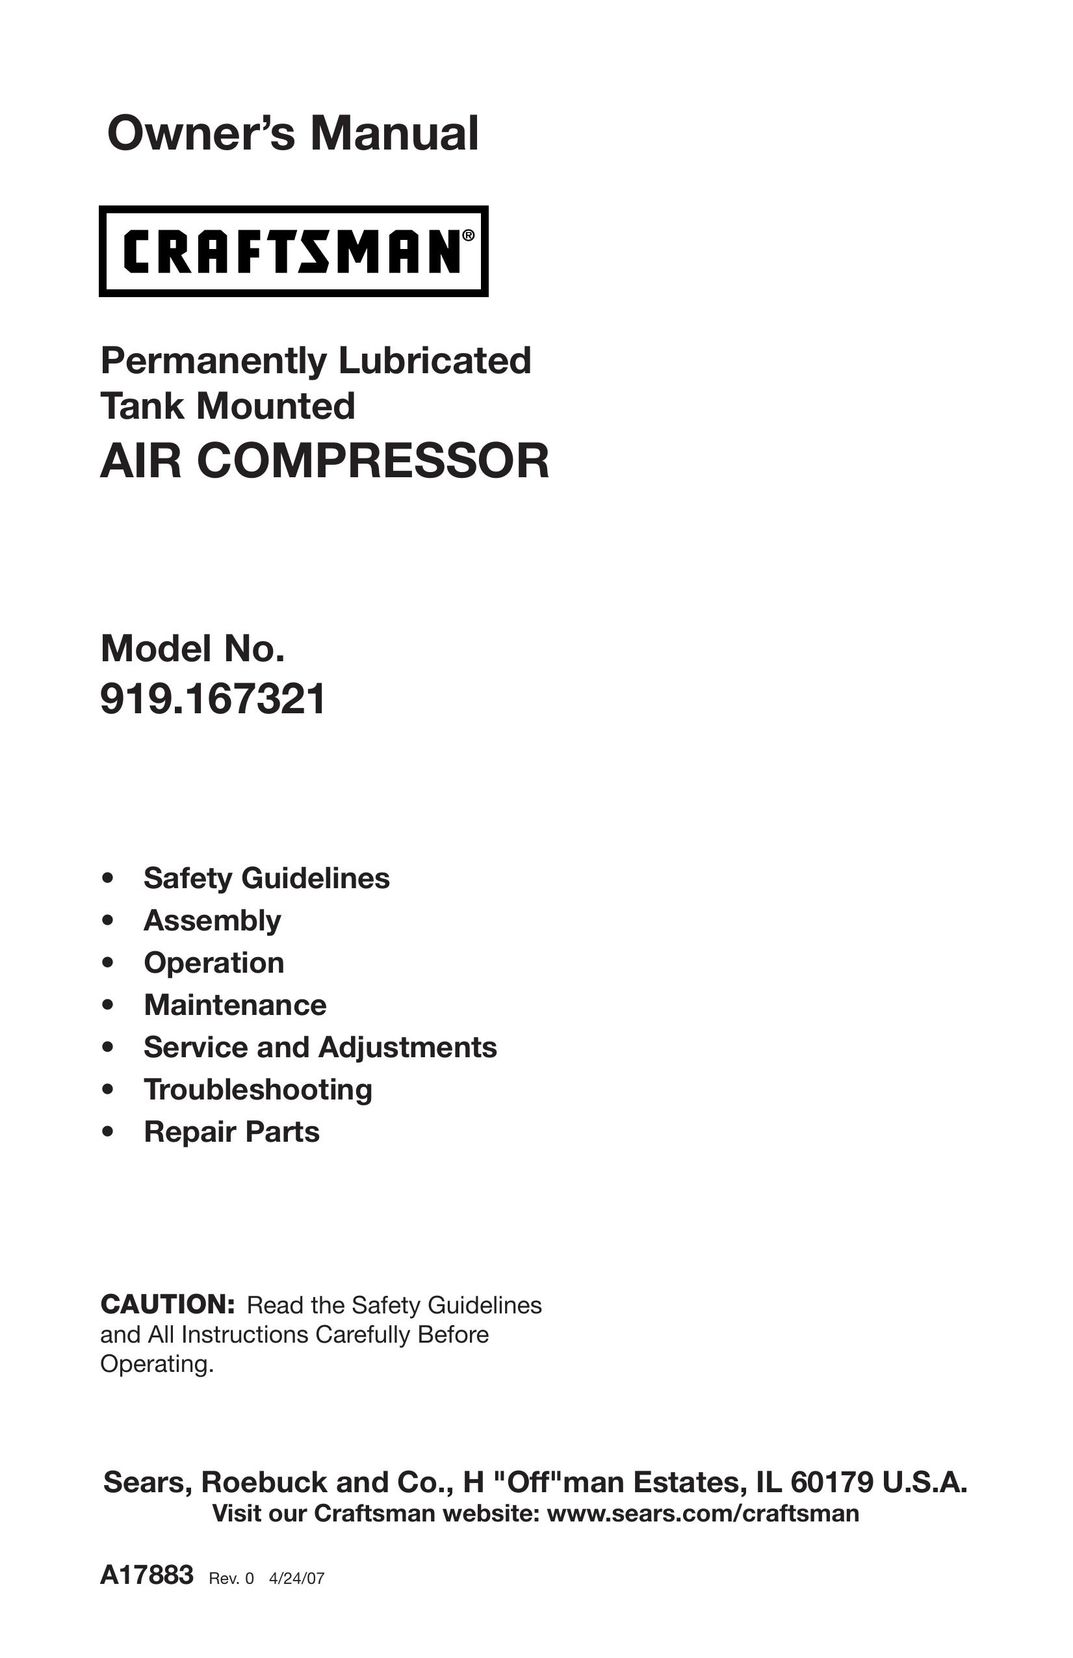 Craftsman 919.167321 Air Compressor User Manual